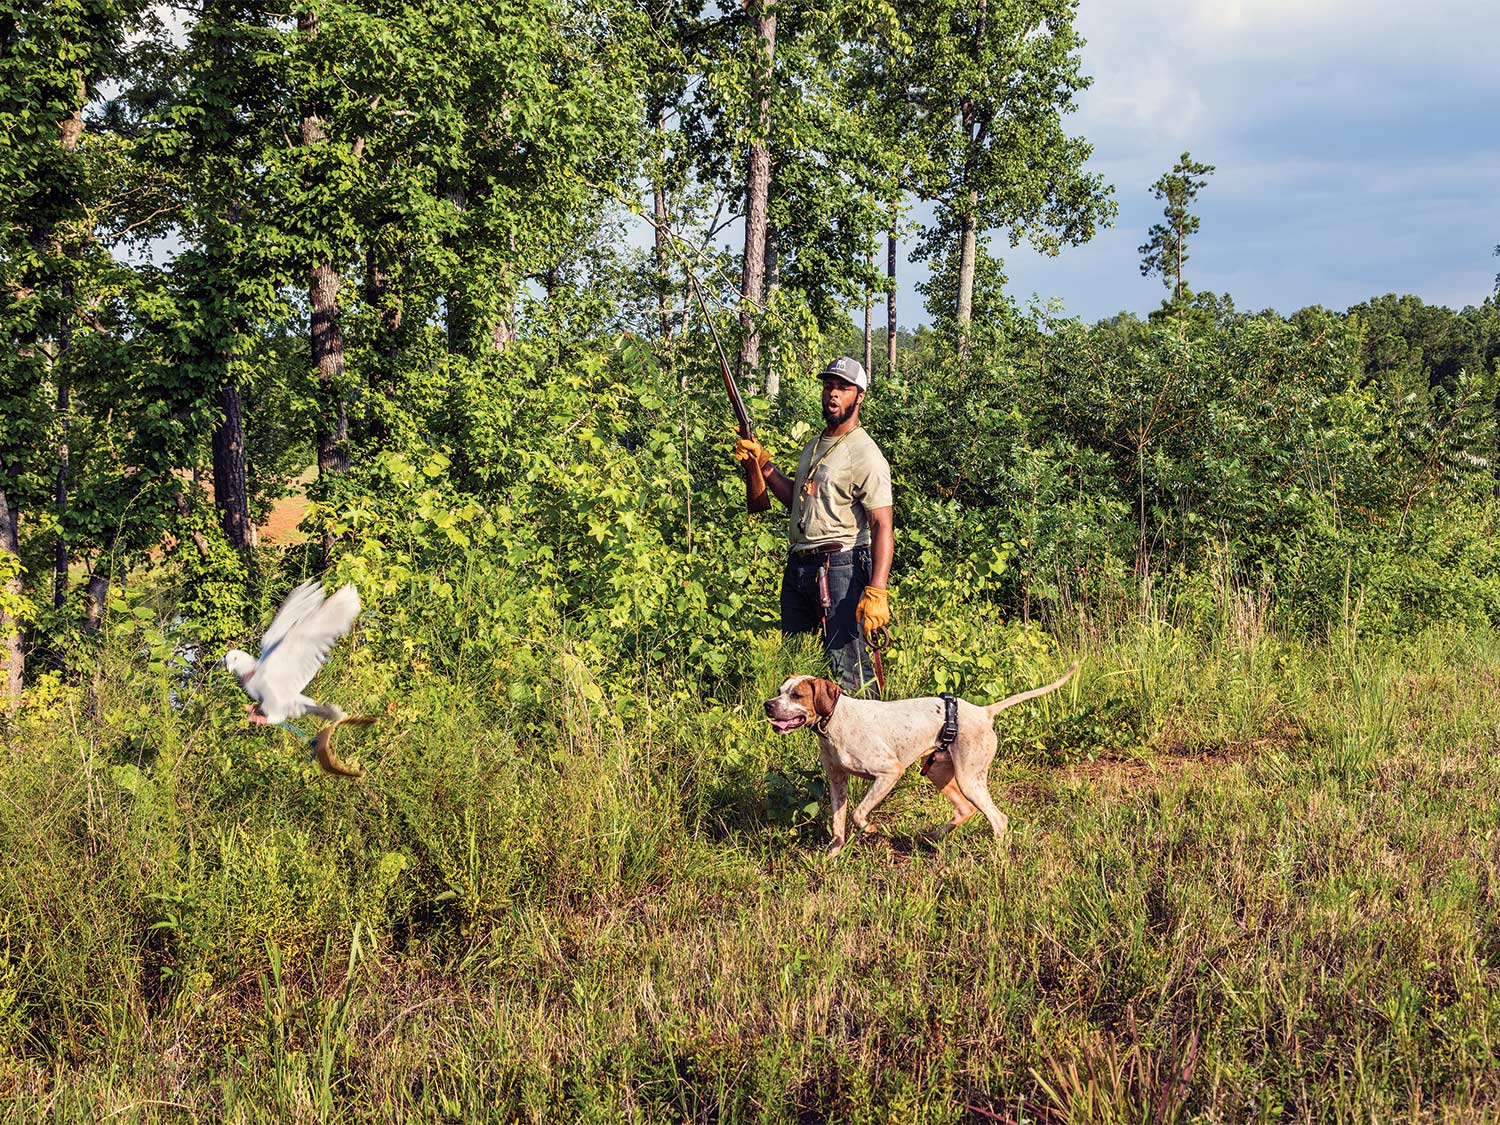 A hunter and dog walk through an open field, flushing birds out of the tall grass.